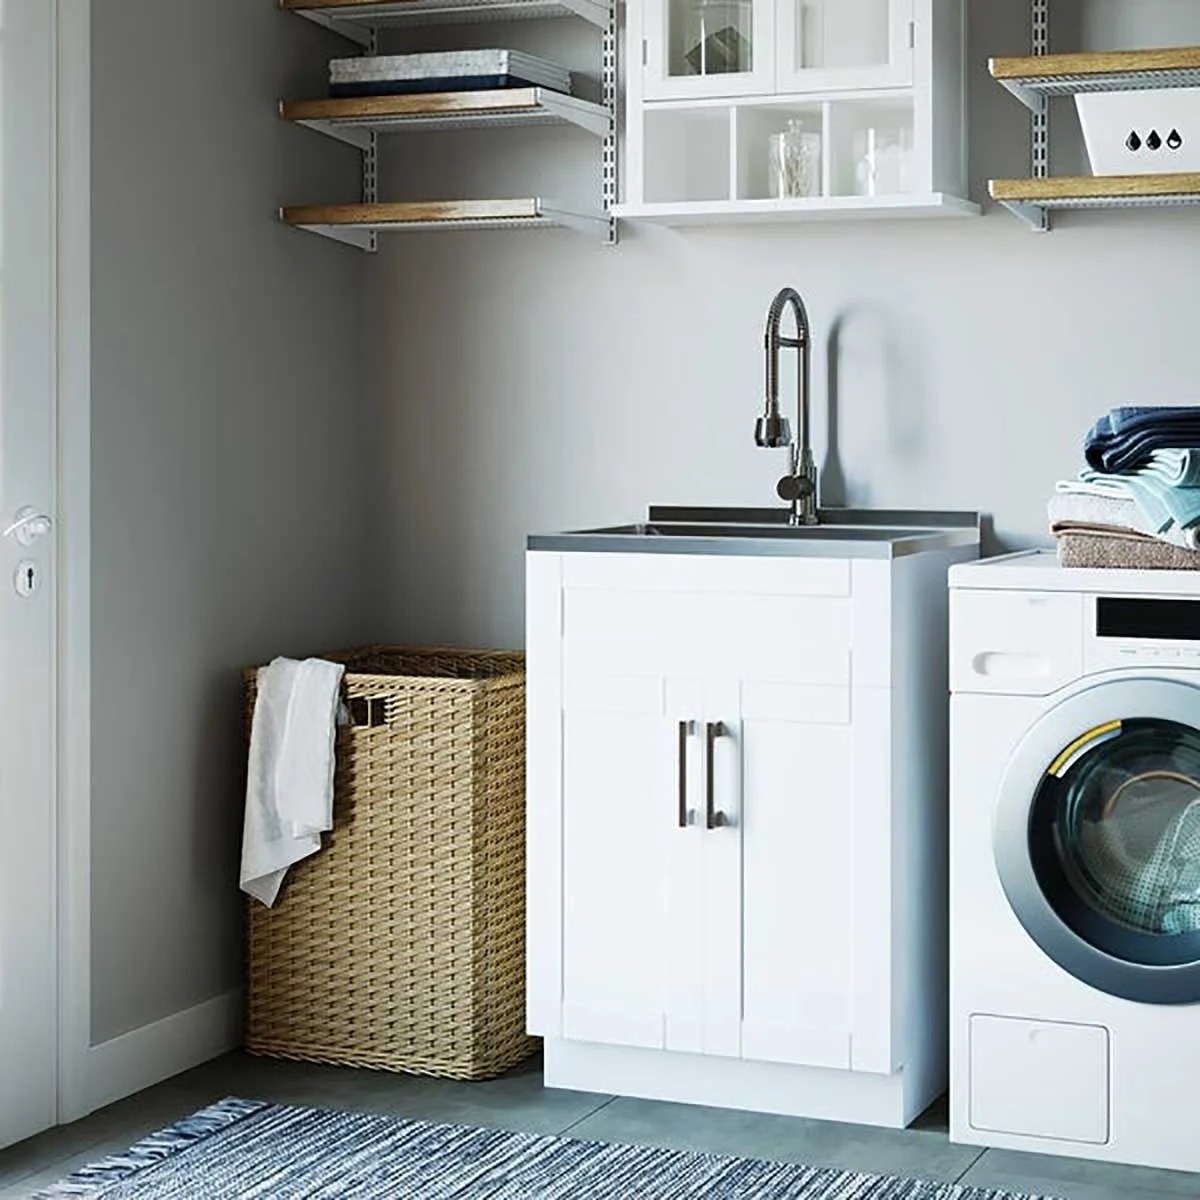 8 Best Laundry Room Storage The Family Handyman